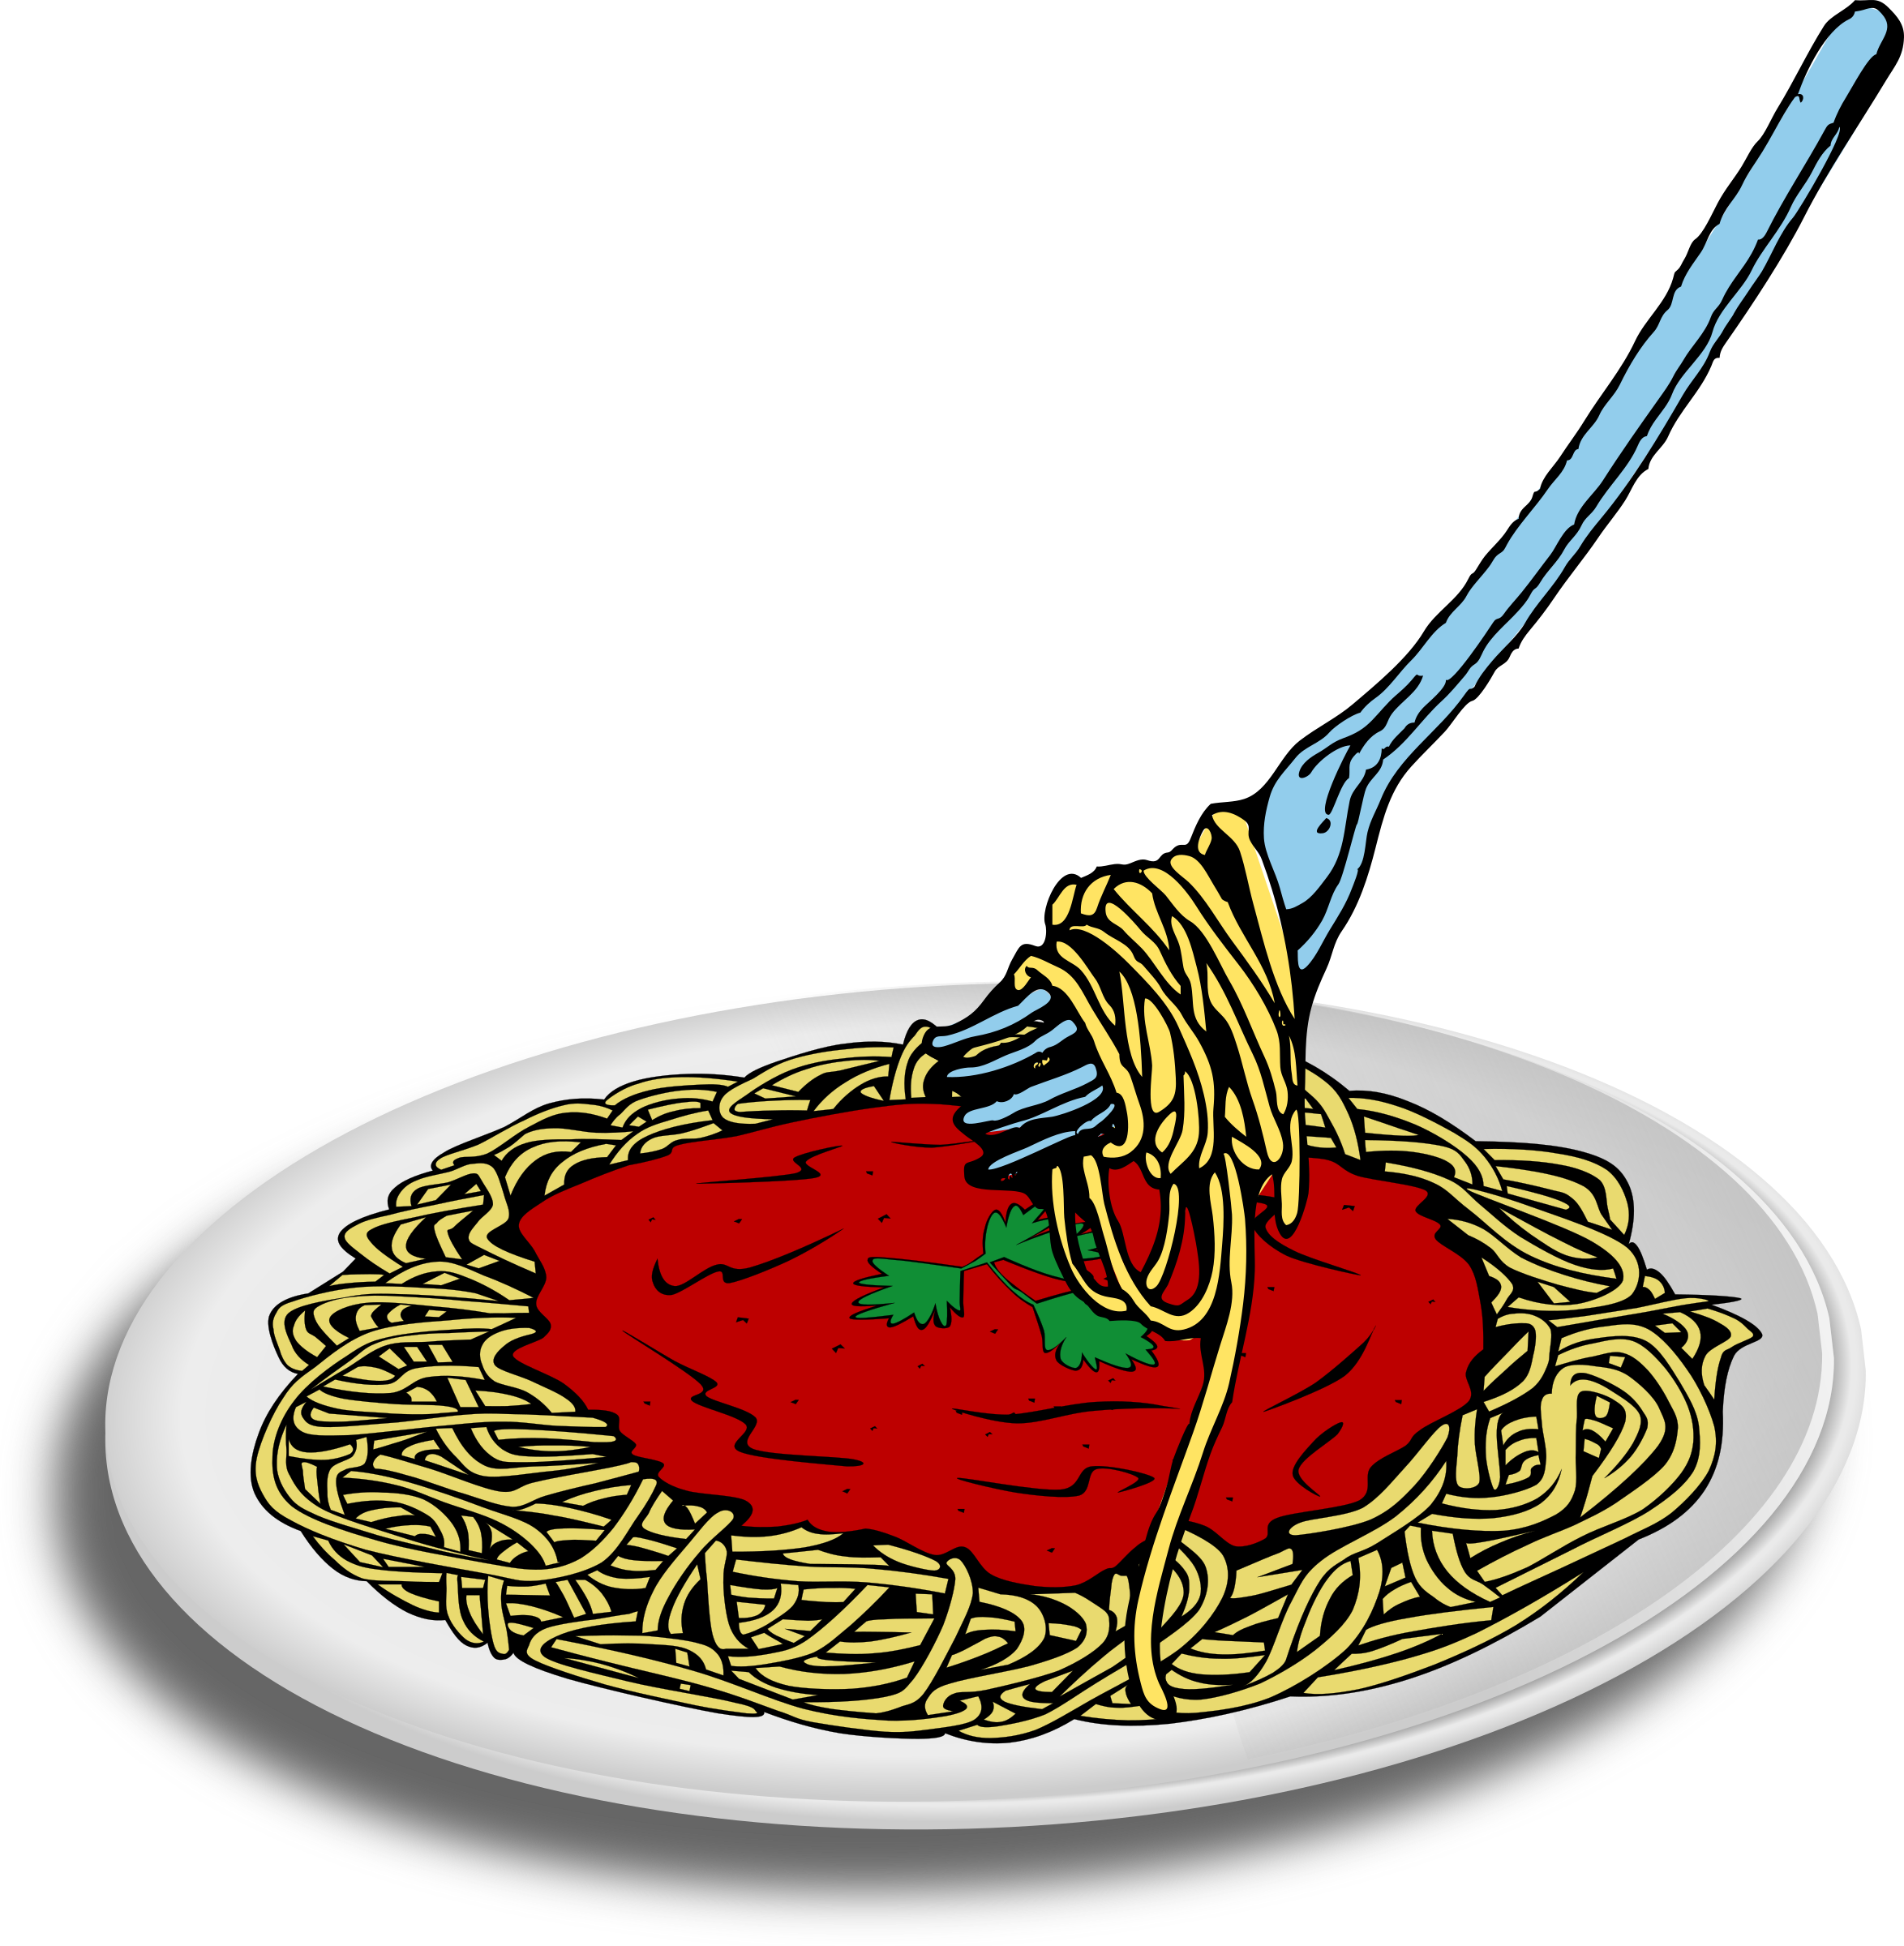 Dessin De Spaghetti Doodle Of Spaghetti And Fork On A Plate. Hand